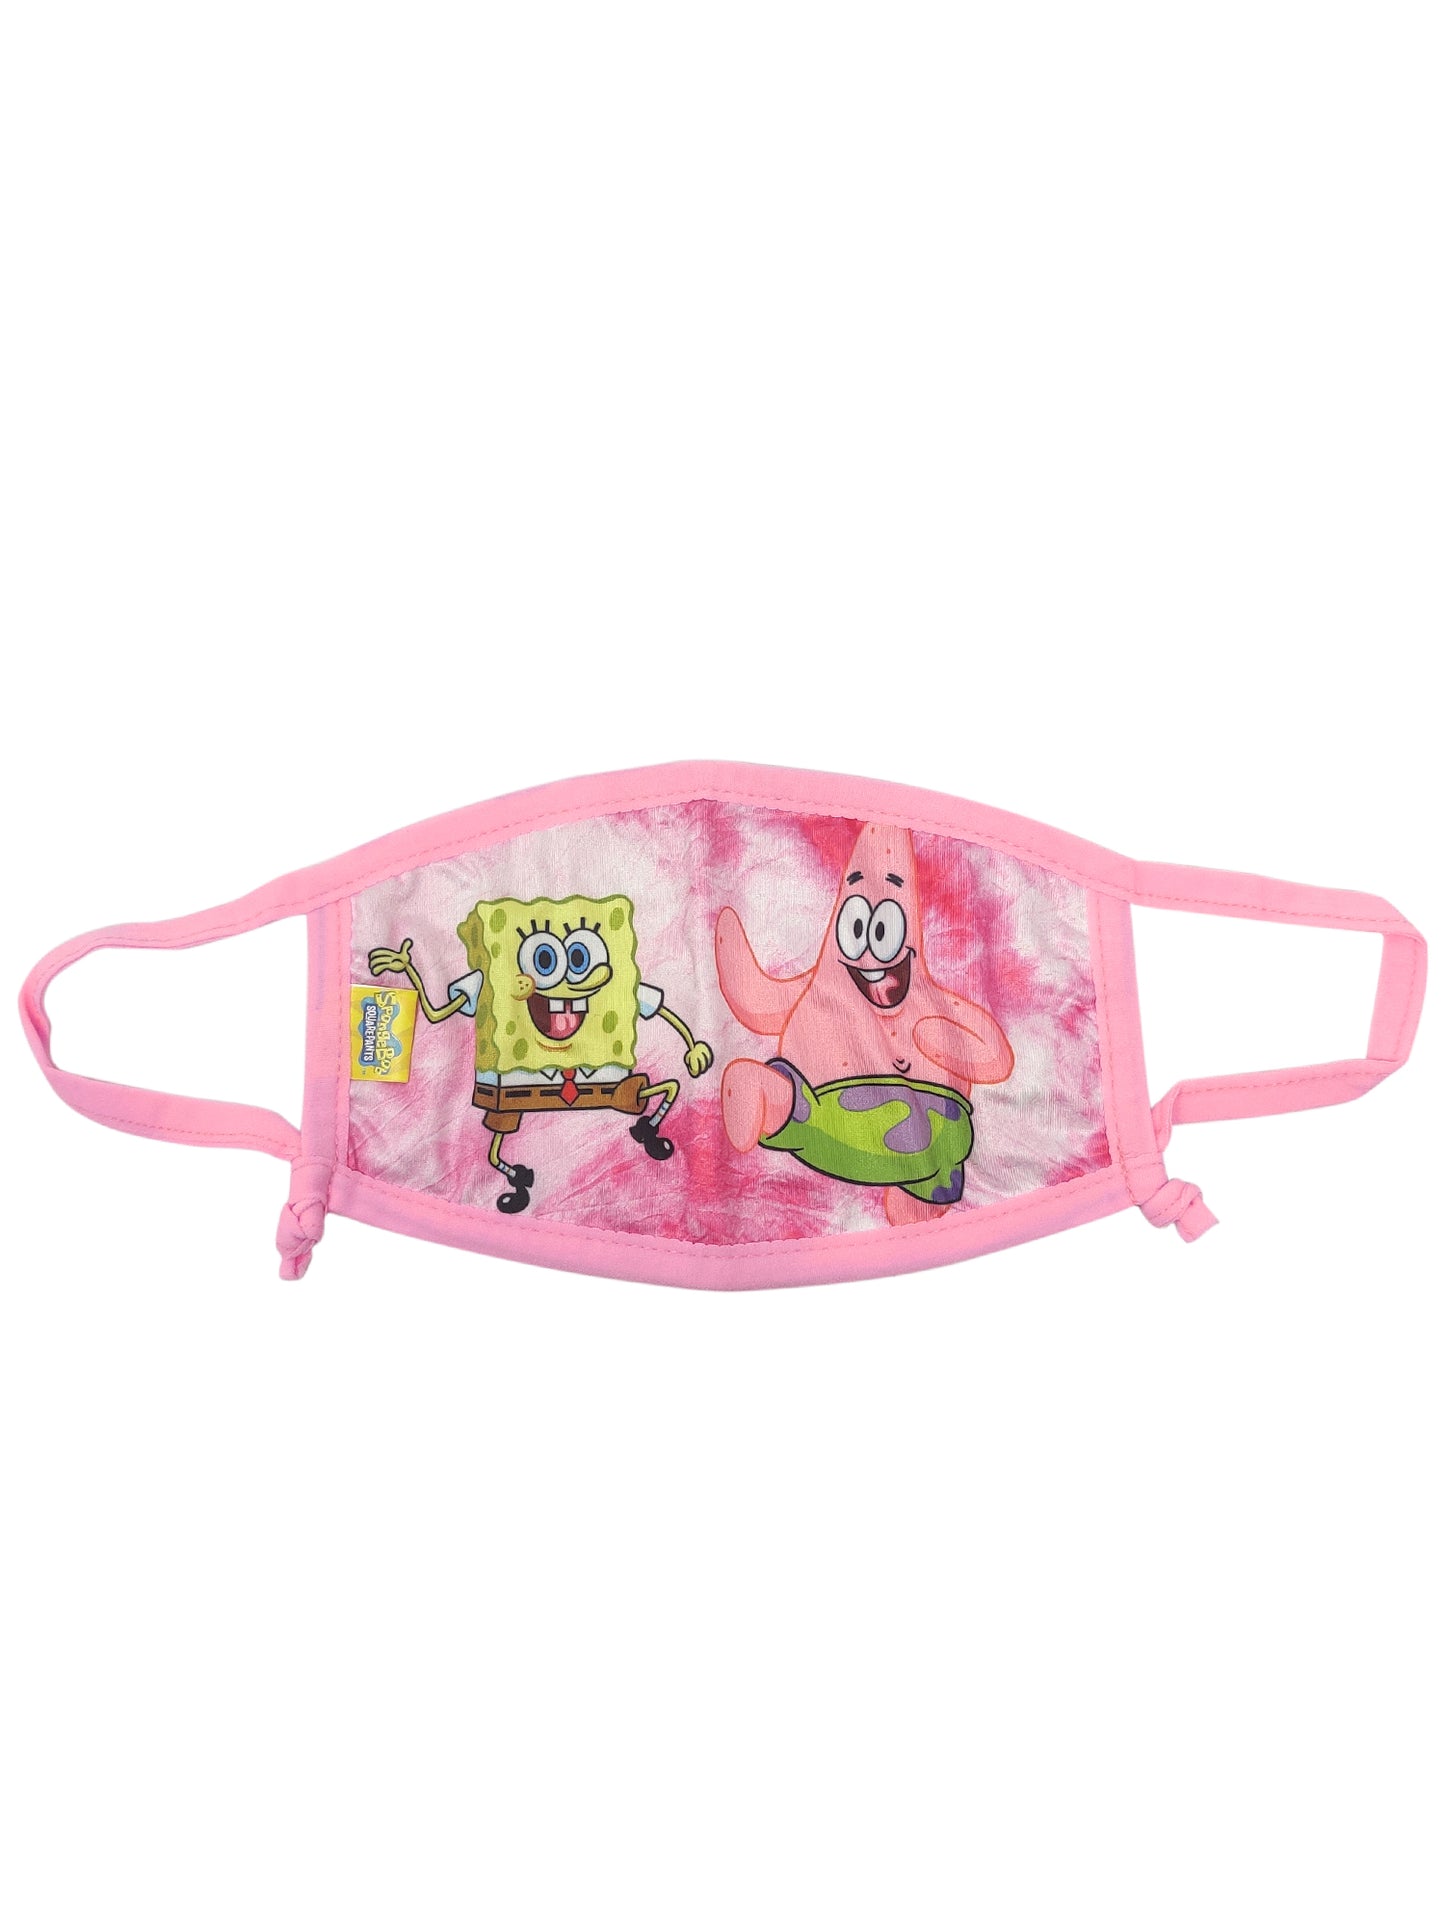 Kids Girls Spongebob Squarepants Reusable Face Mask Pink w/ Removable Strap